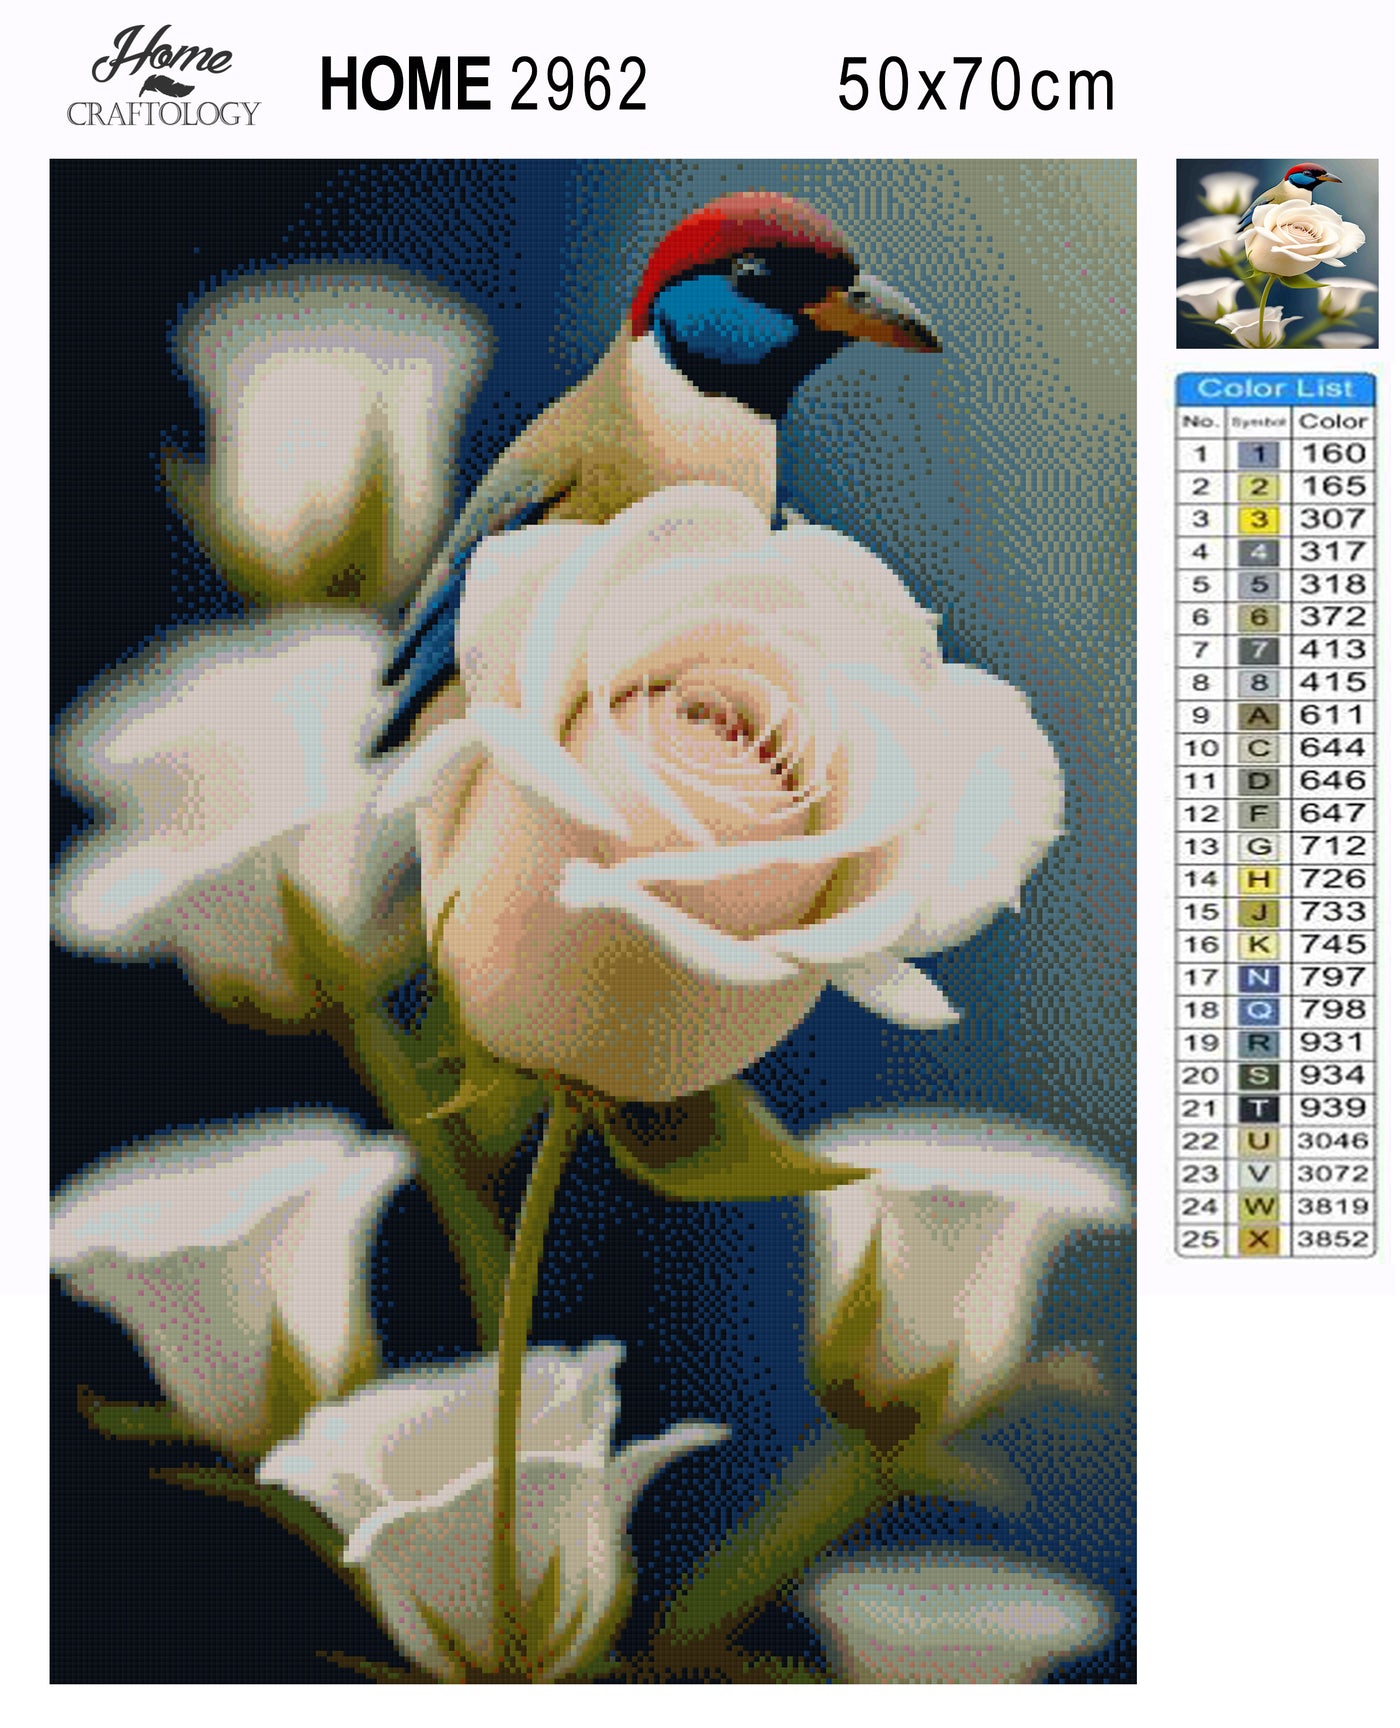 Bird on White Rose - Premium Diamond Painting Kit